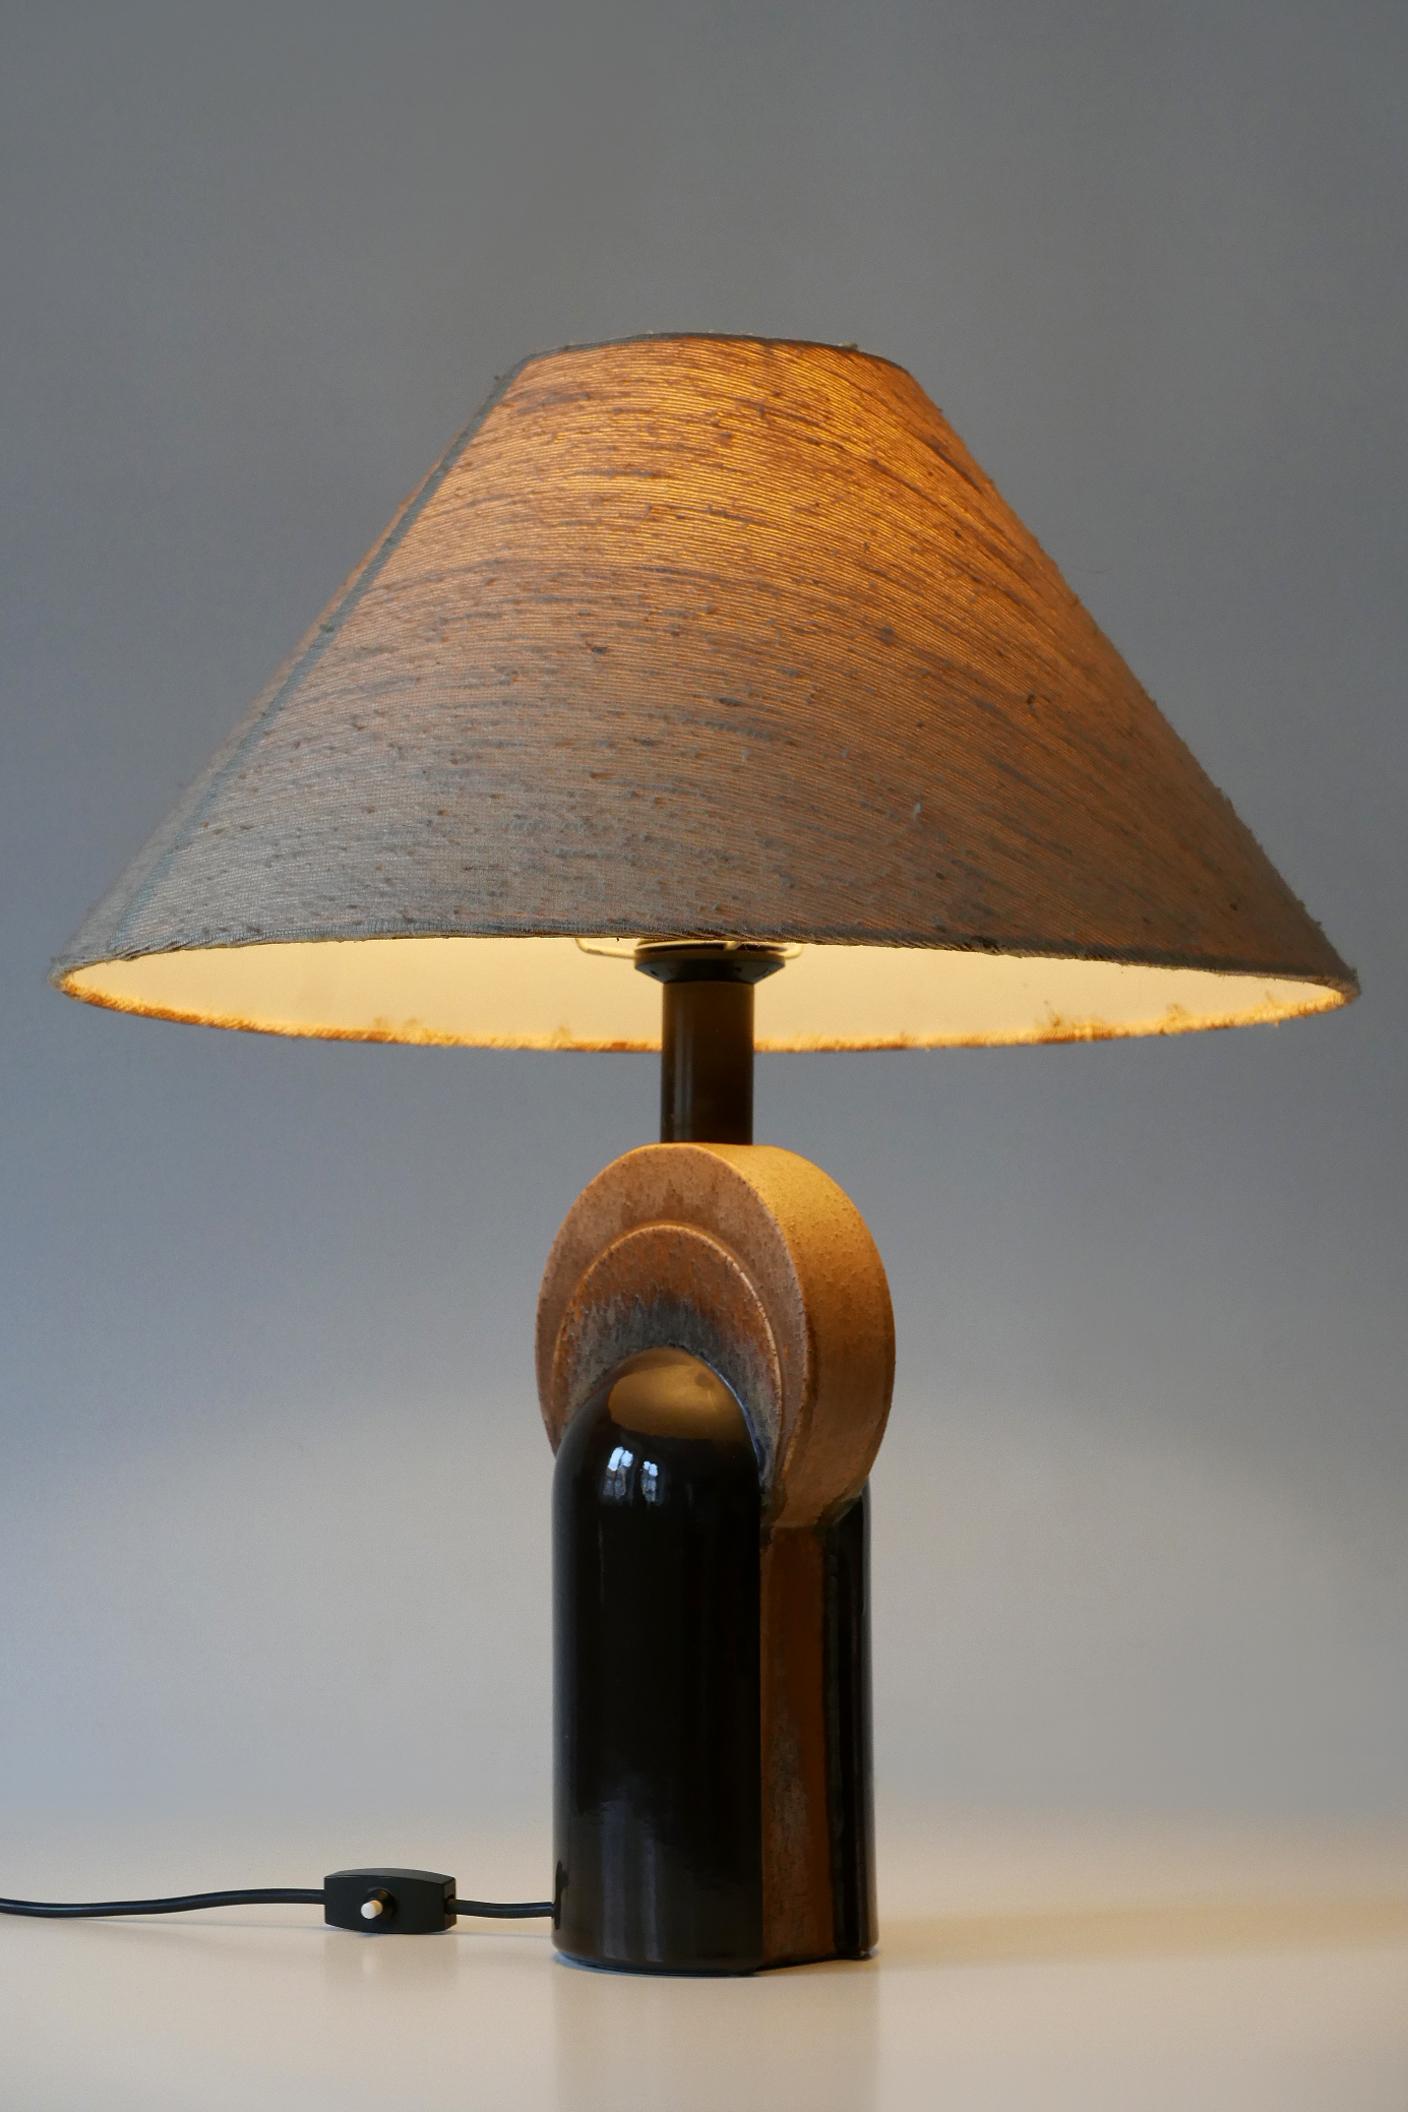 Elegant Mid-Century Modern Ceramic Table Lamp by Leola Design Germany 1960s For Sale 5